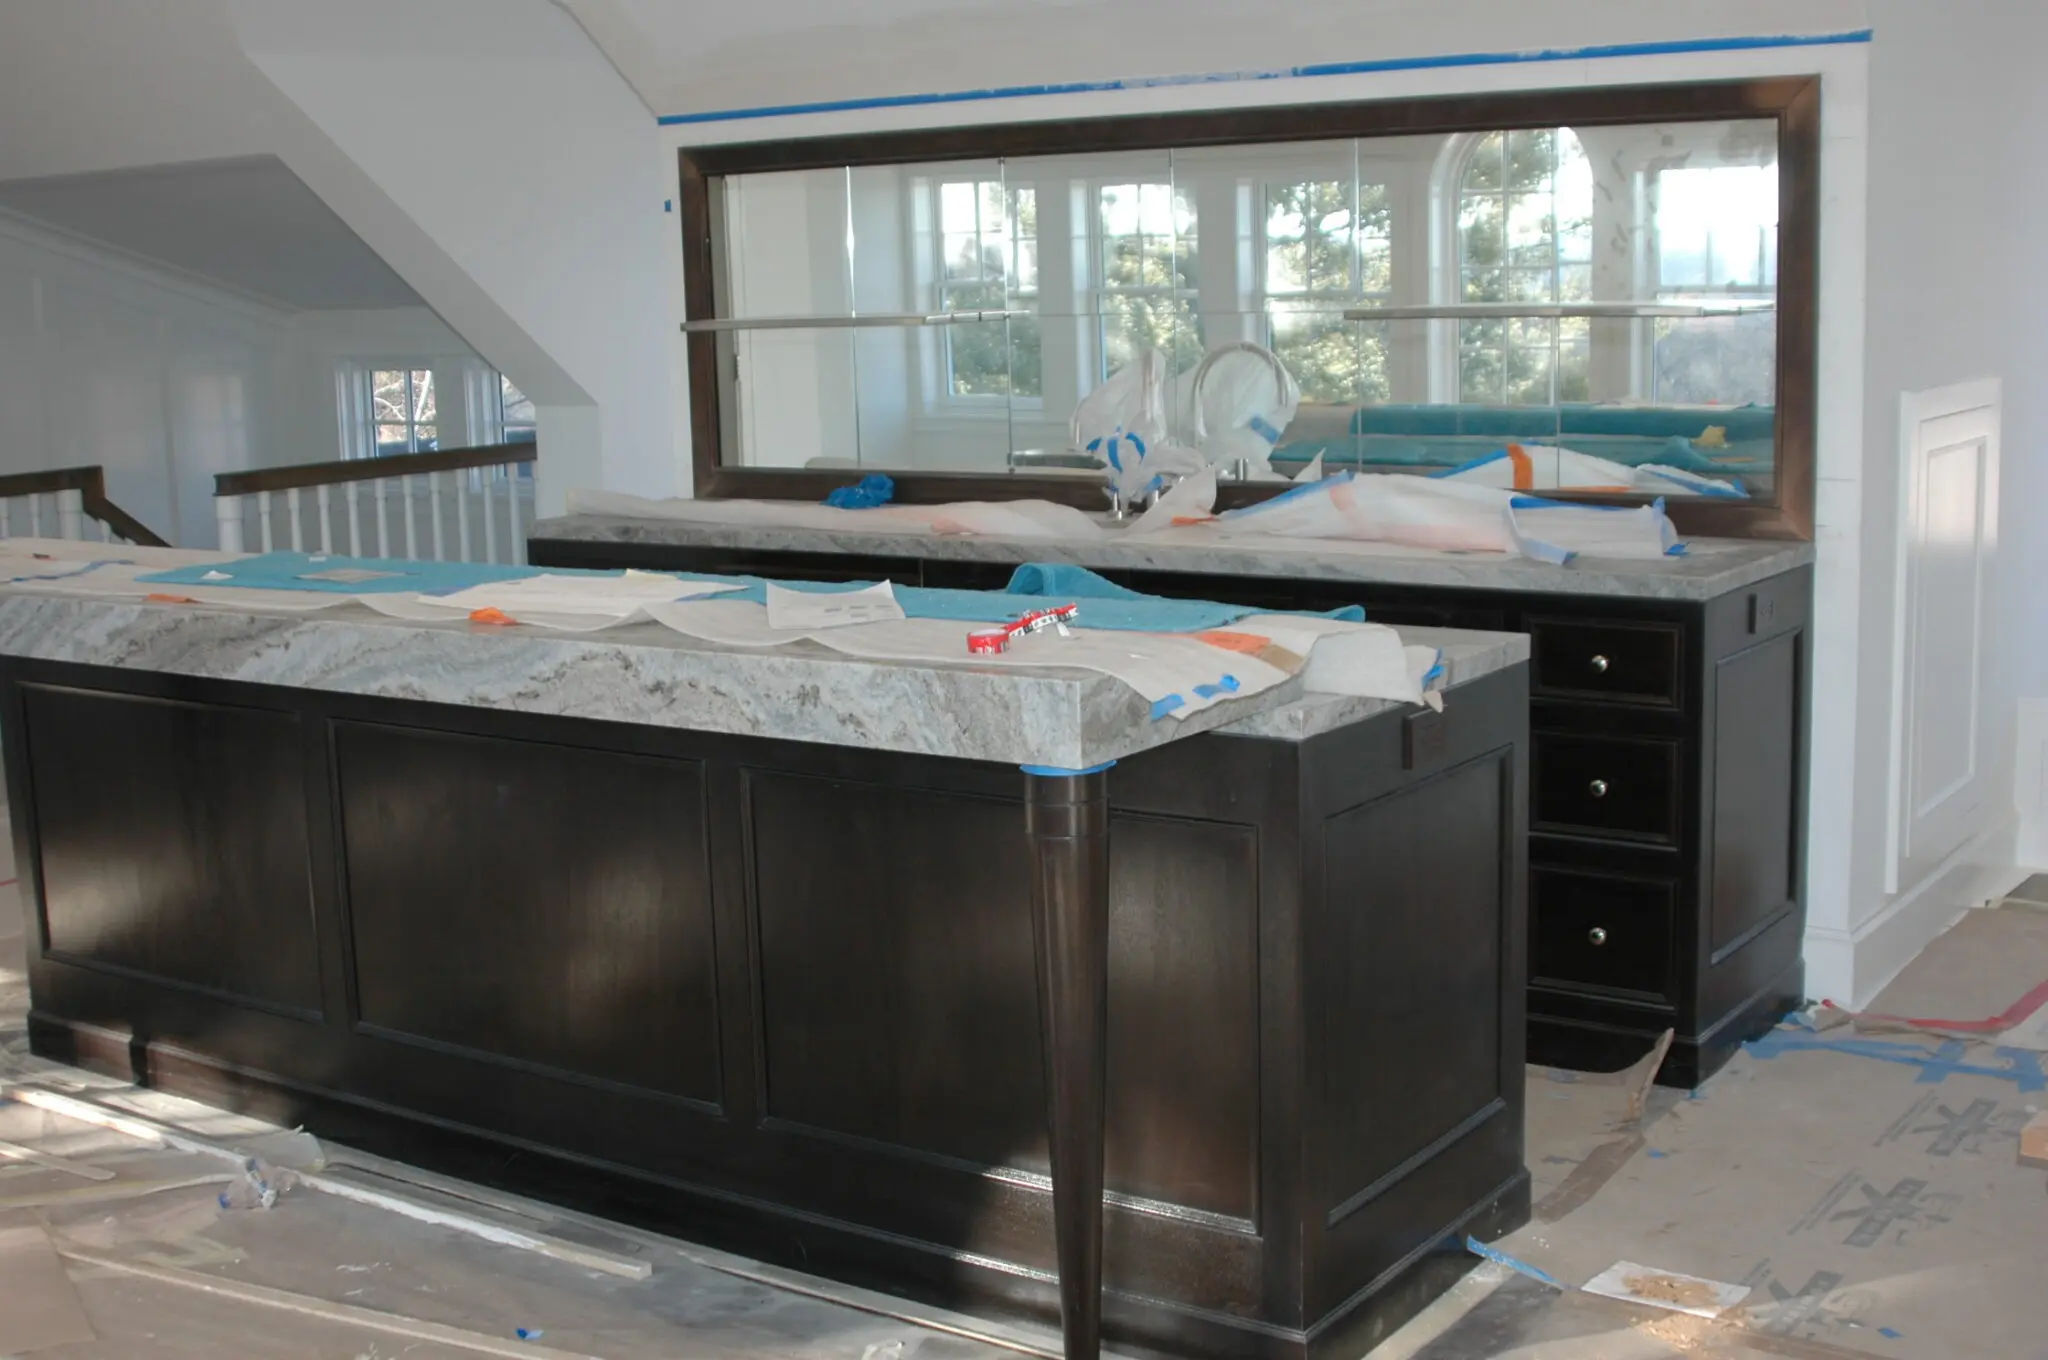 The custom kitchen renovation with elegant countertop